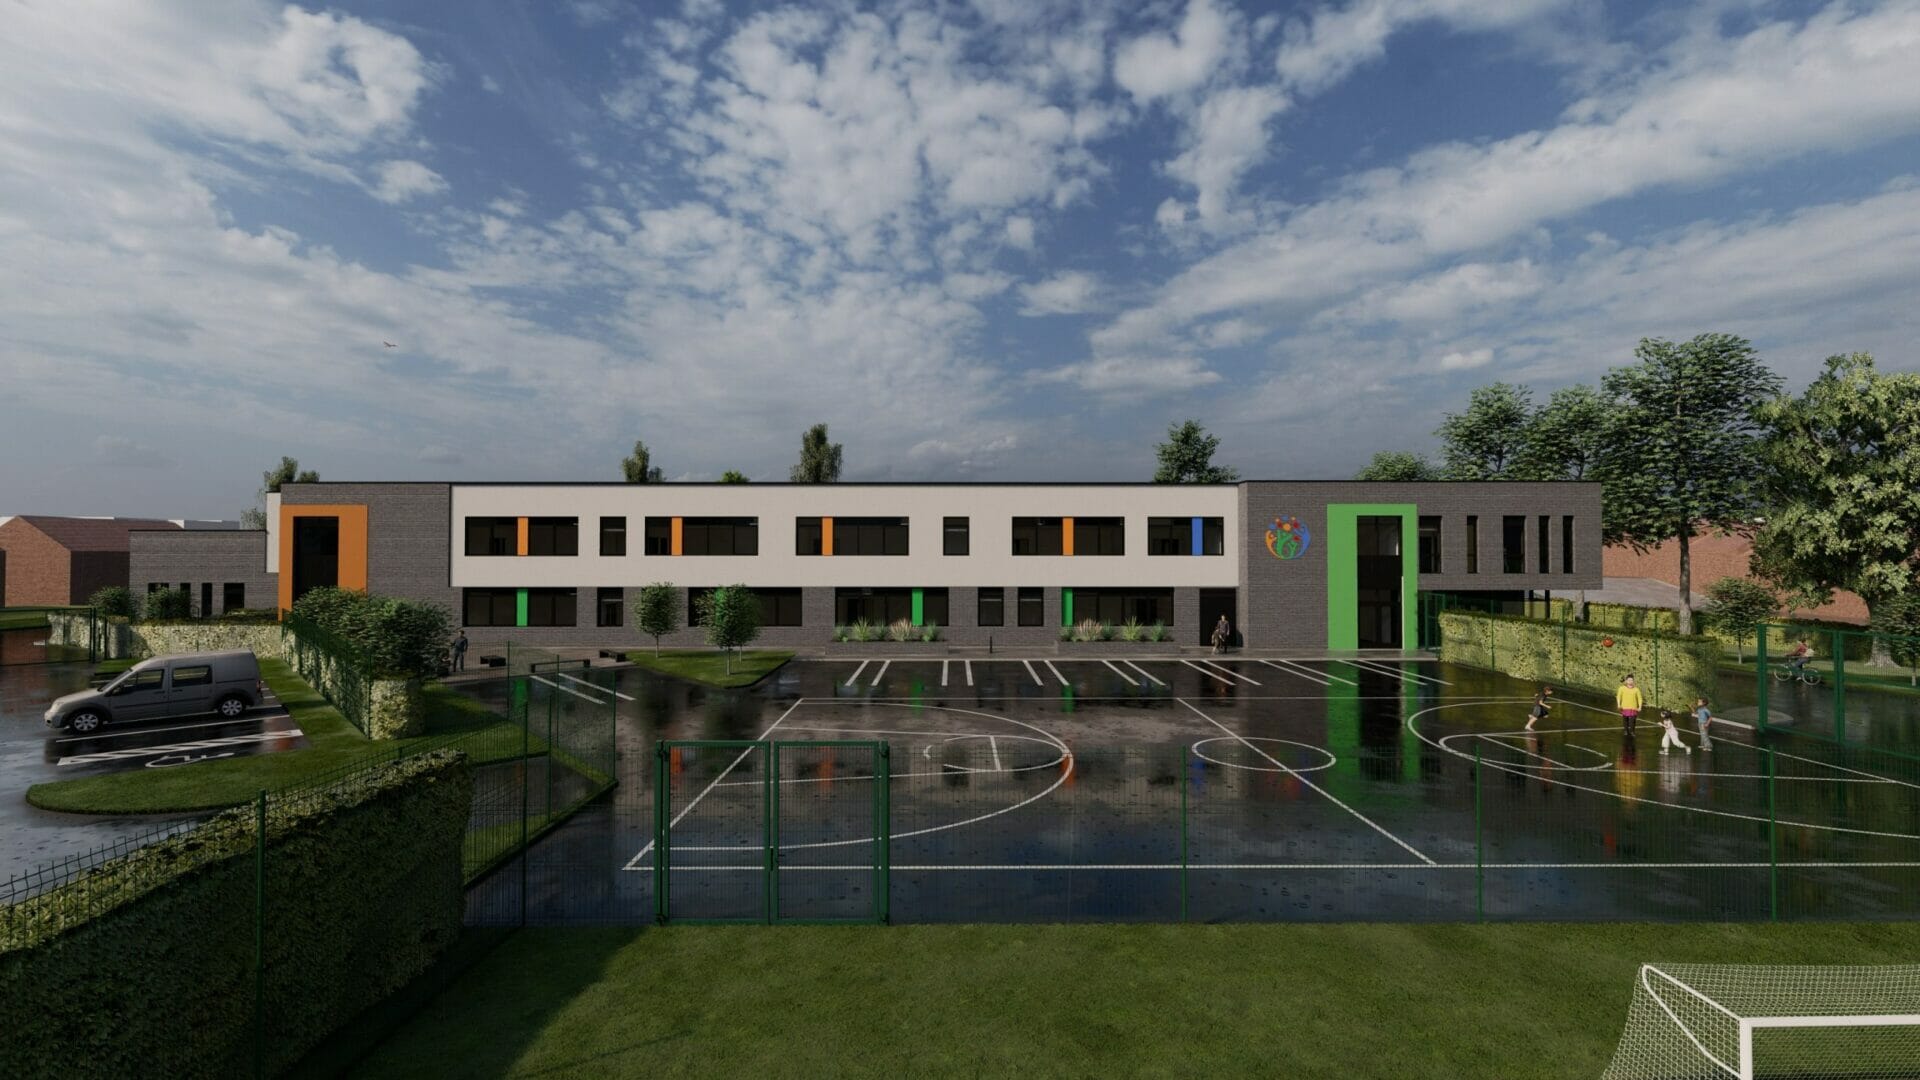 Works begin on pivotal build of West Midlands SEND school  @GFTomlinson